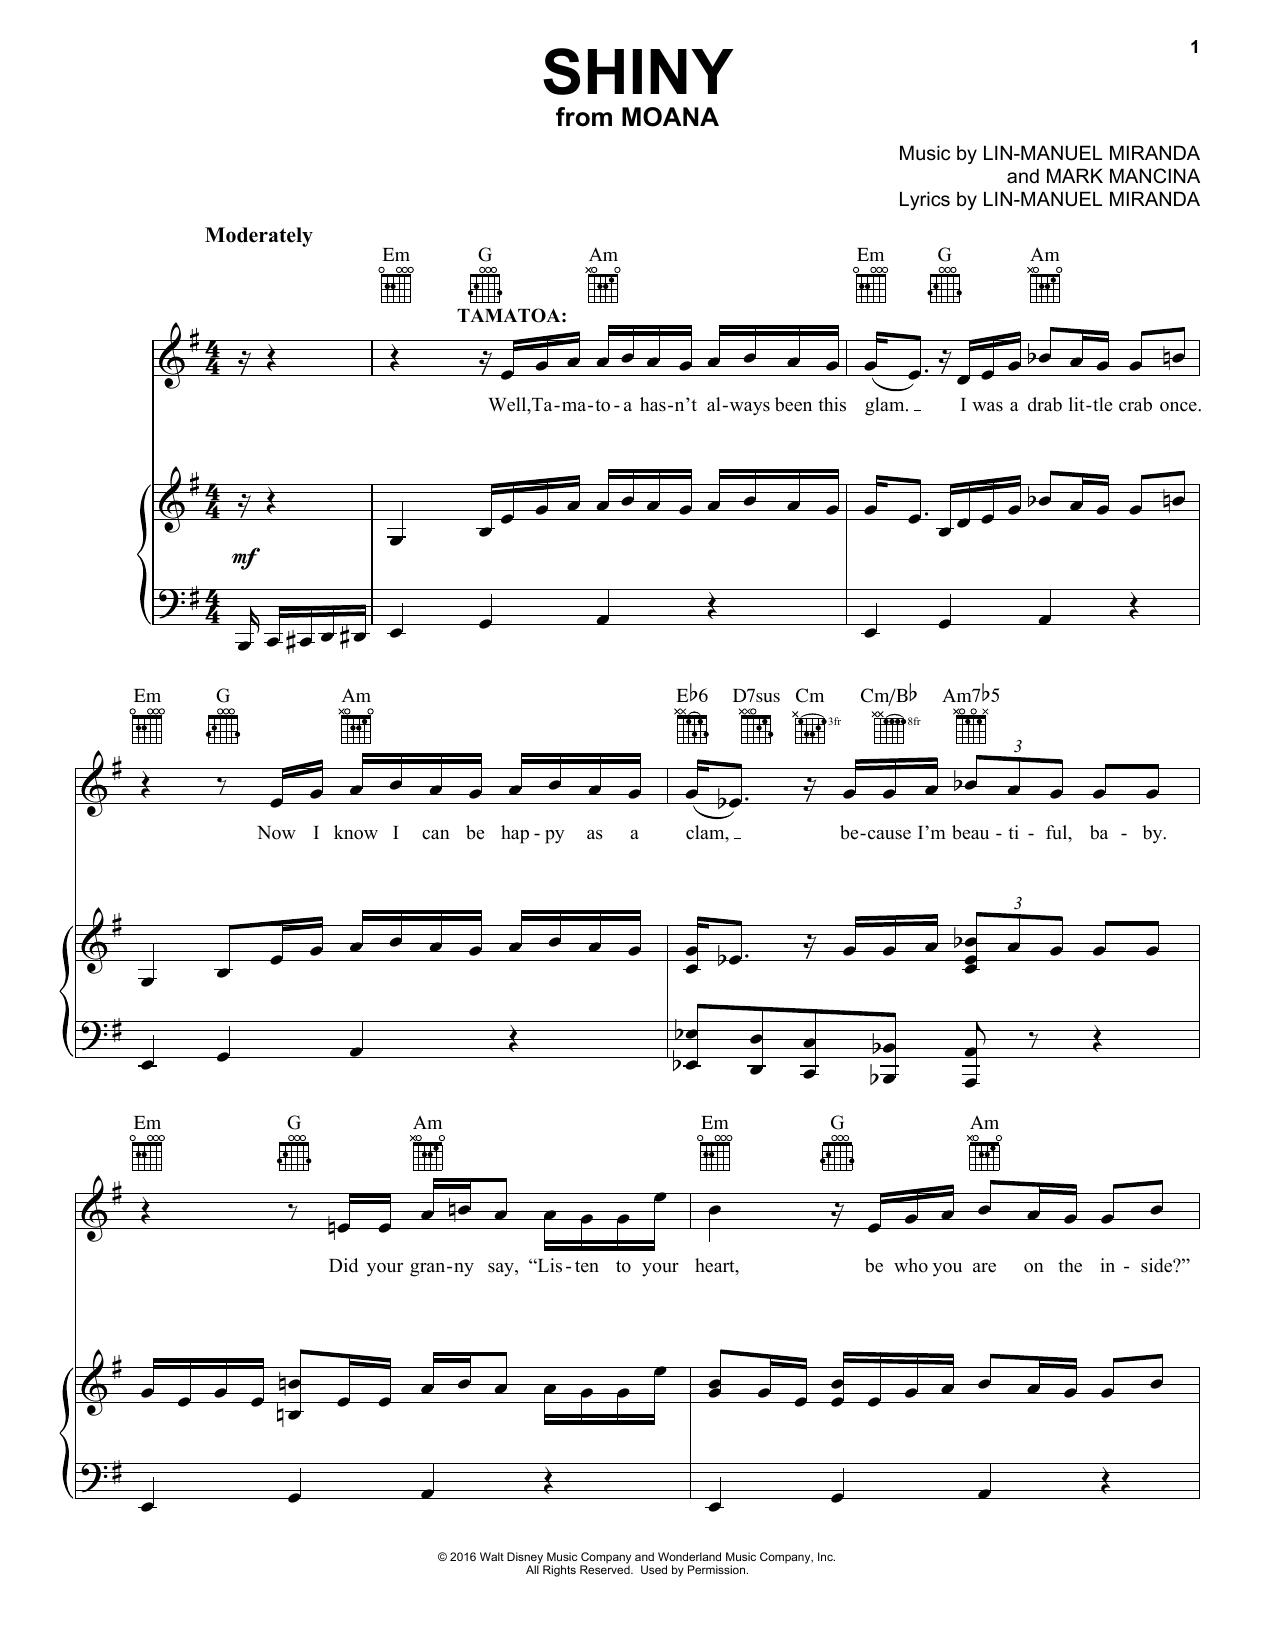 Lin-Manuel Miranda Shiny (from Moana) Sheet Music Notes & Chords for Easy Guitar Tab - Download or Print PDF